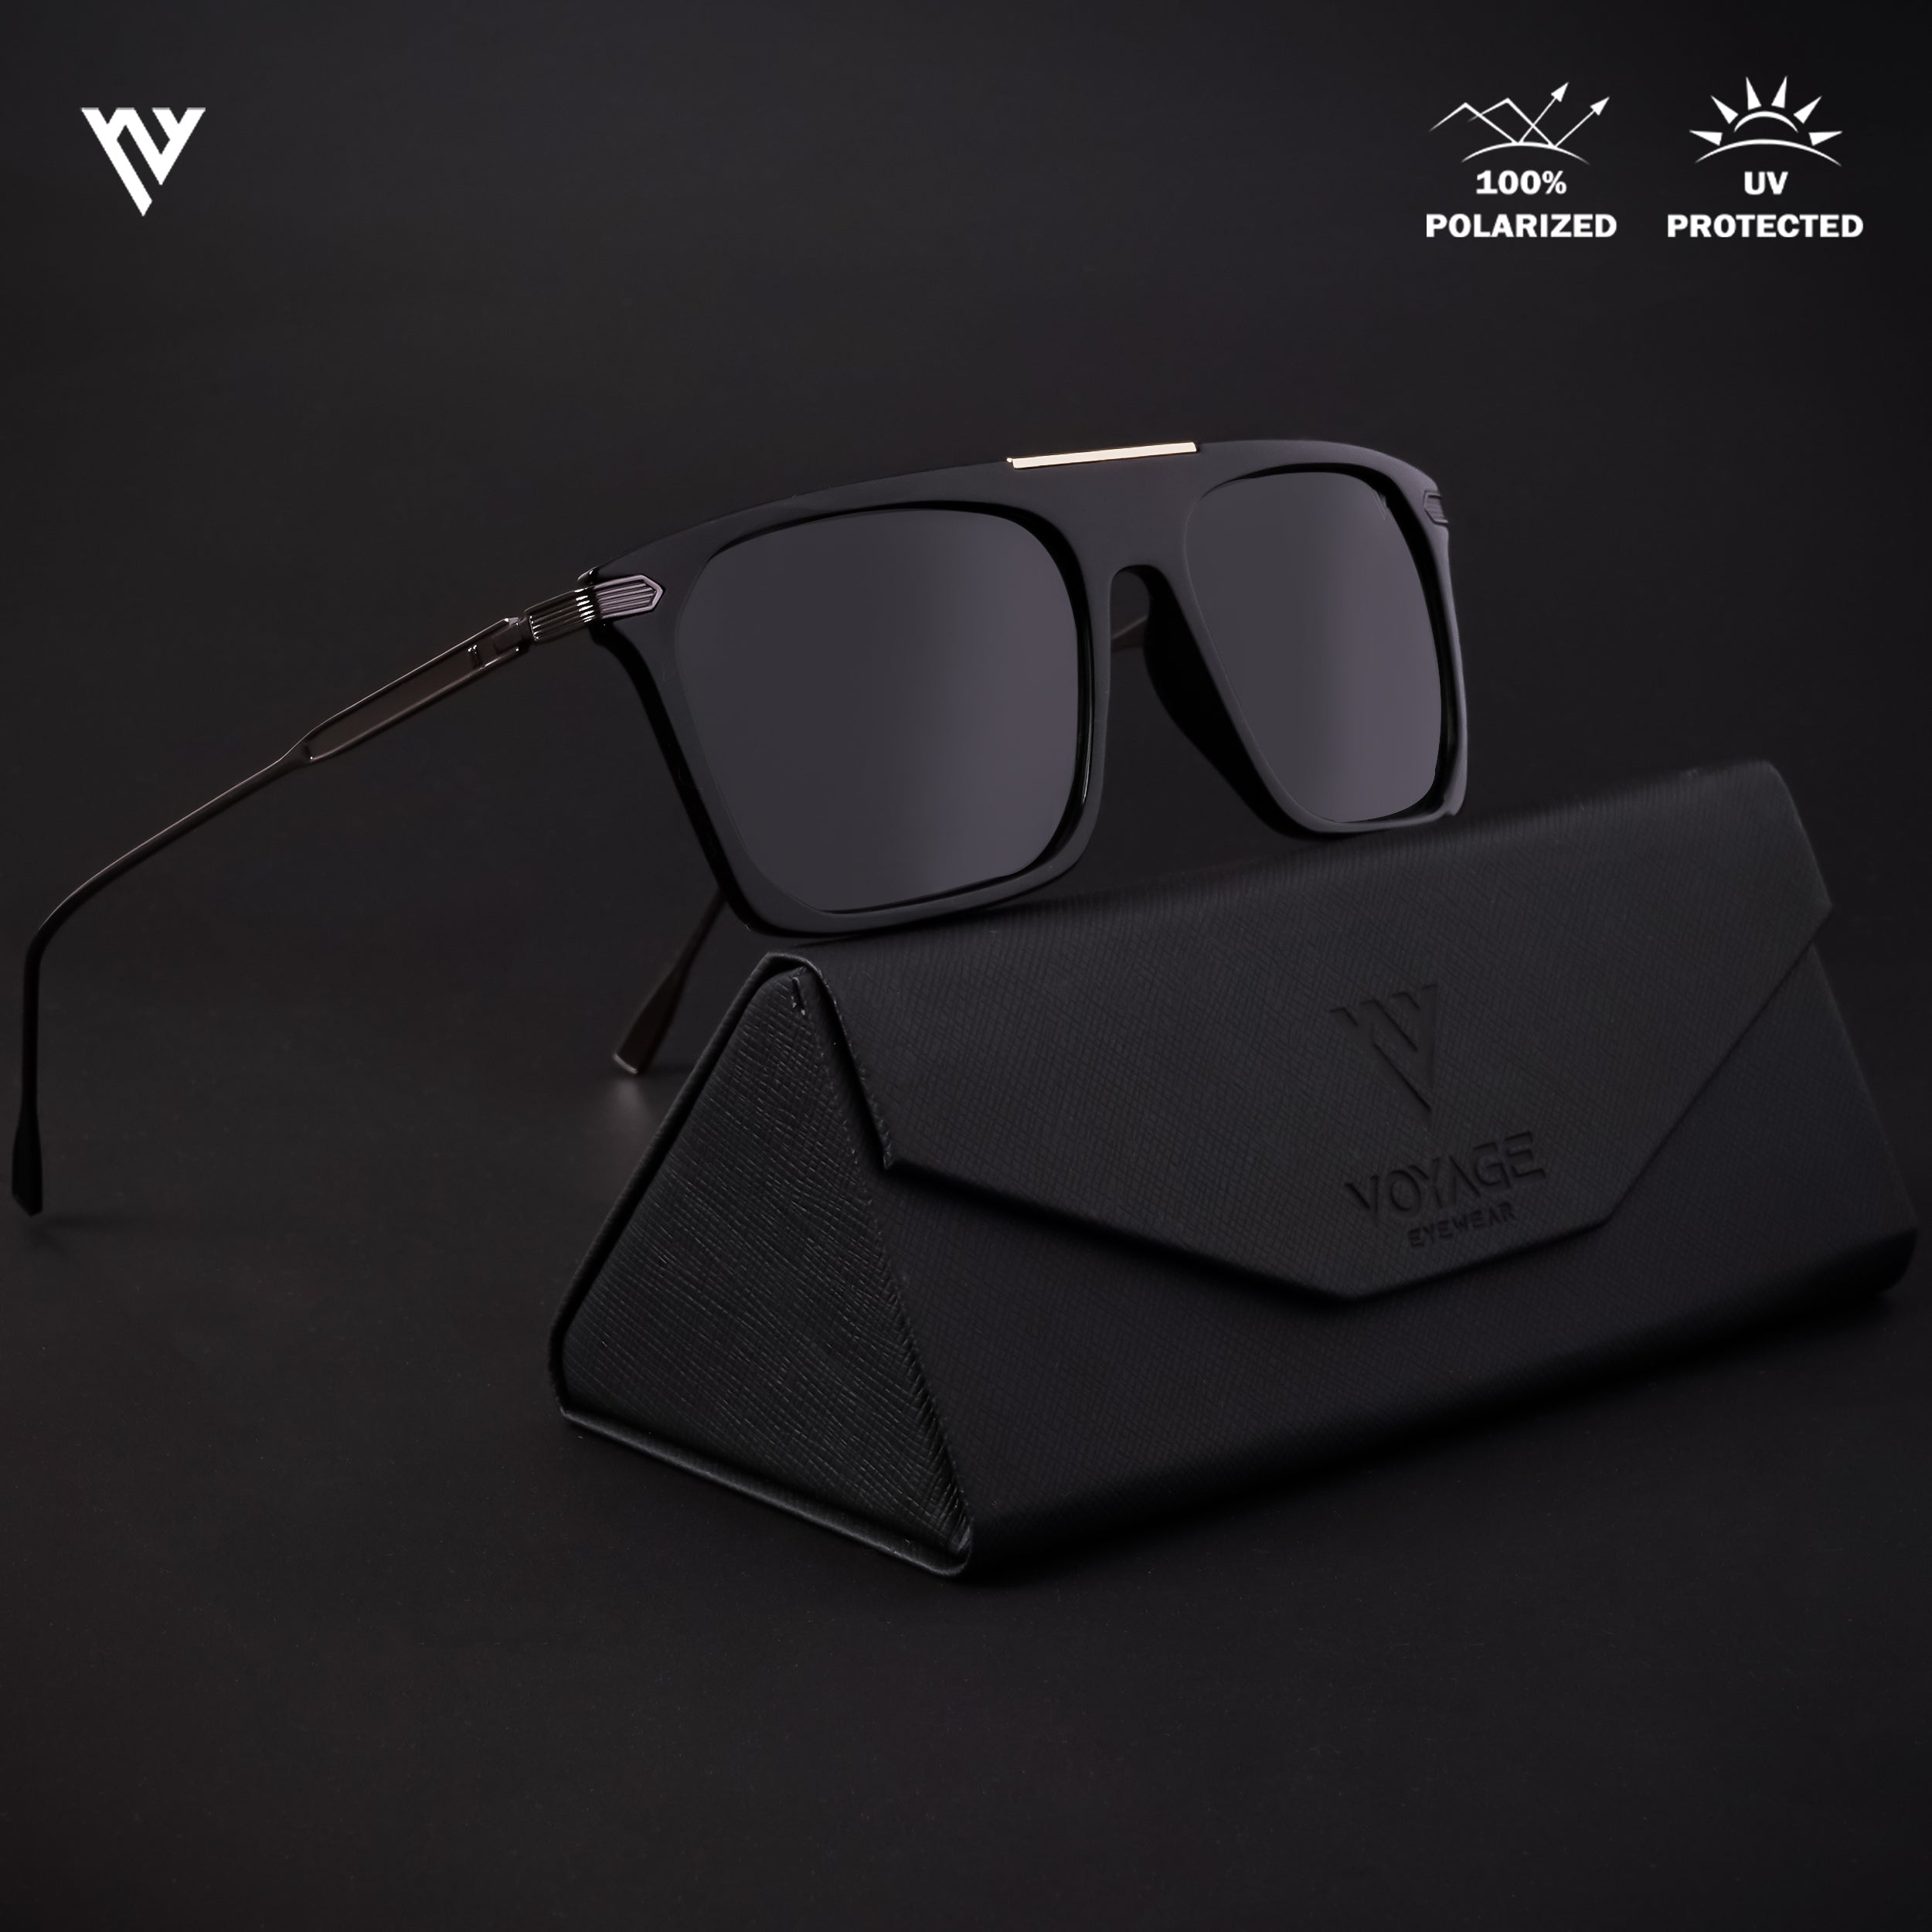 Voyage Exclusive Shine Black Polarized Wayfarer Sunglasses for Men & Women - PMG4450